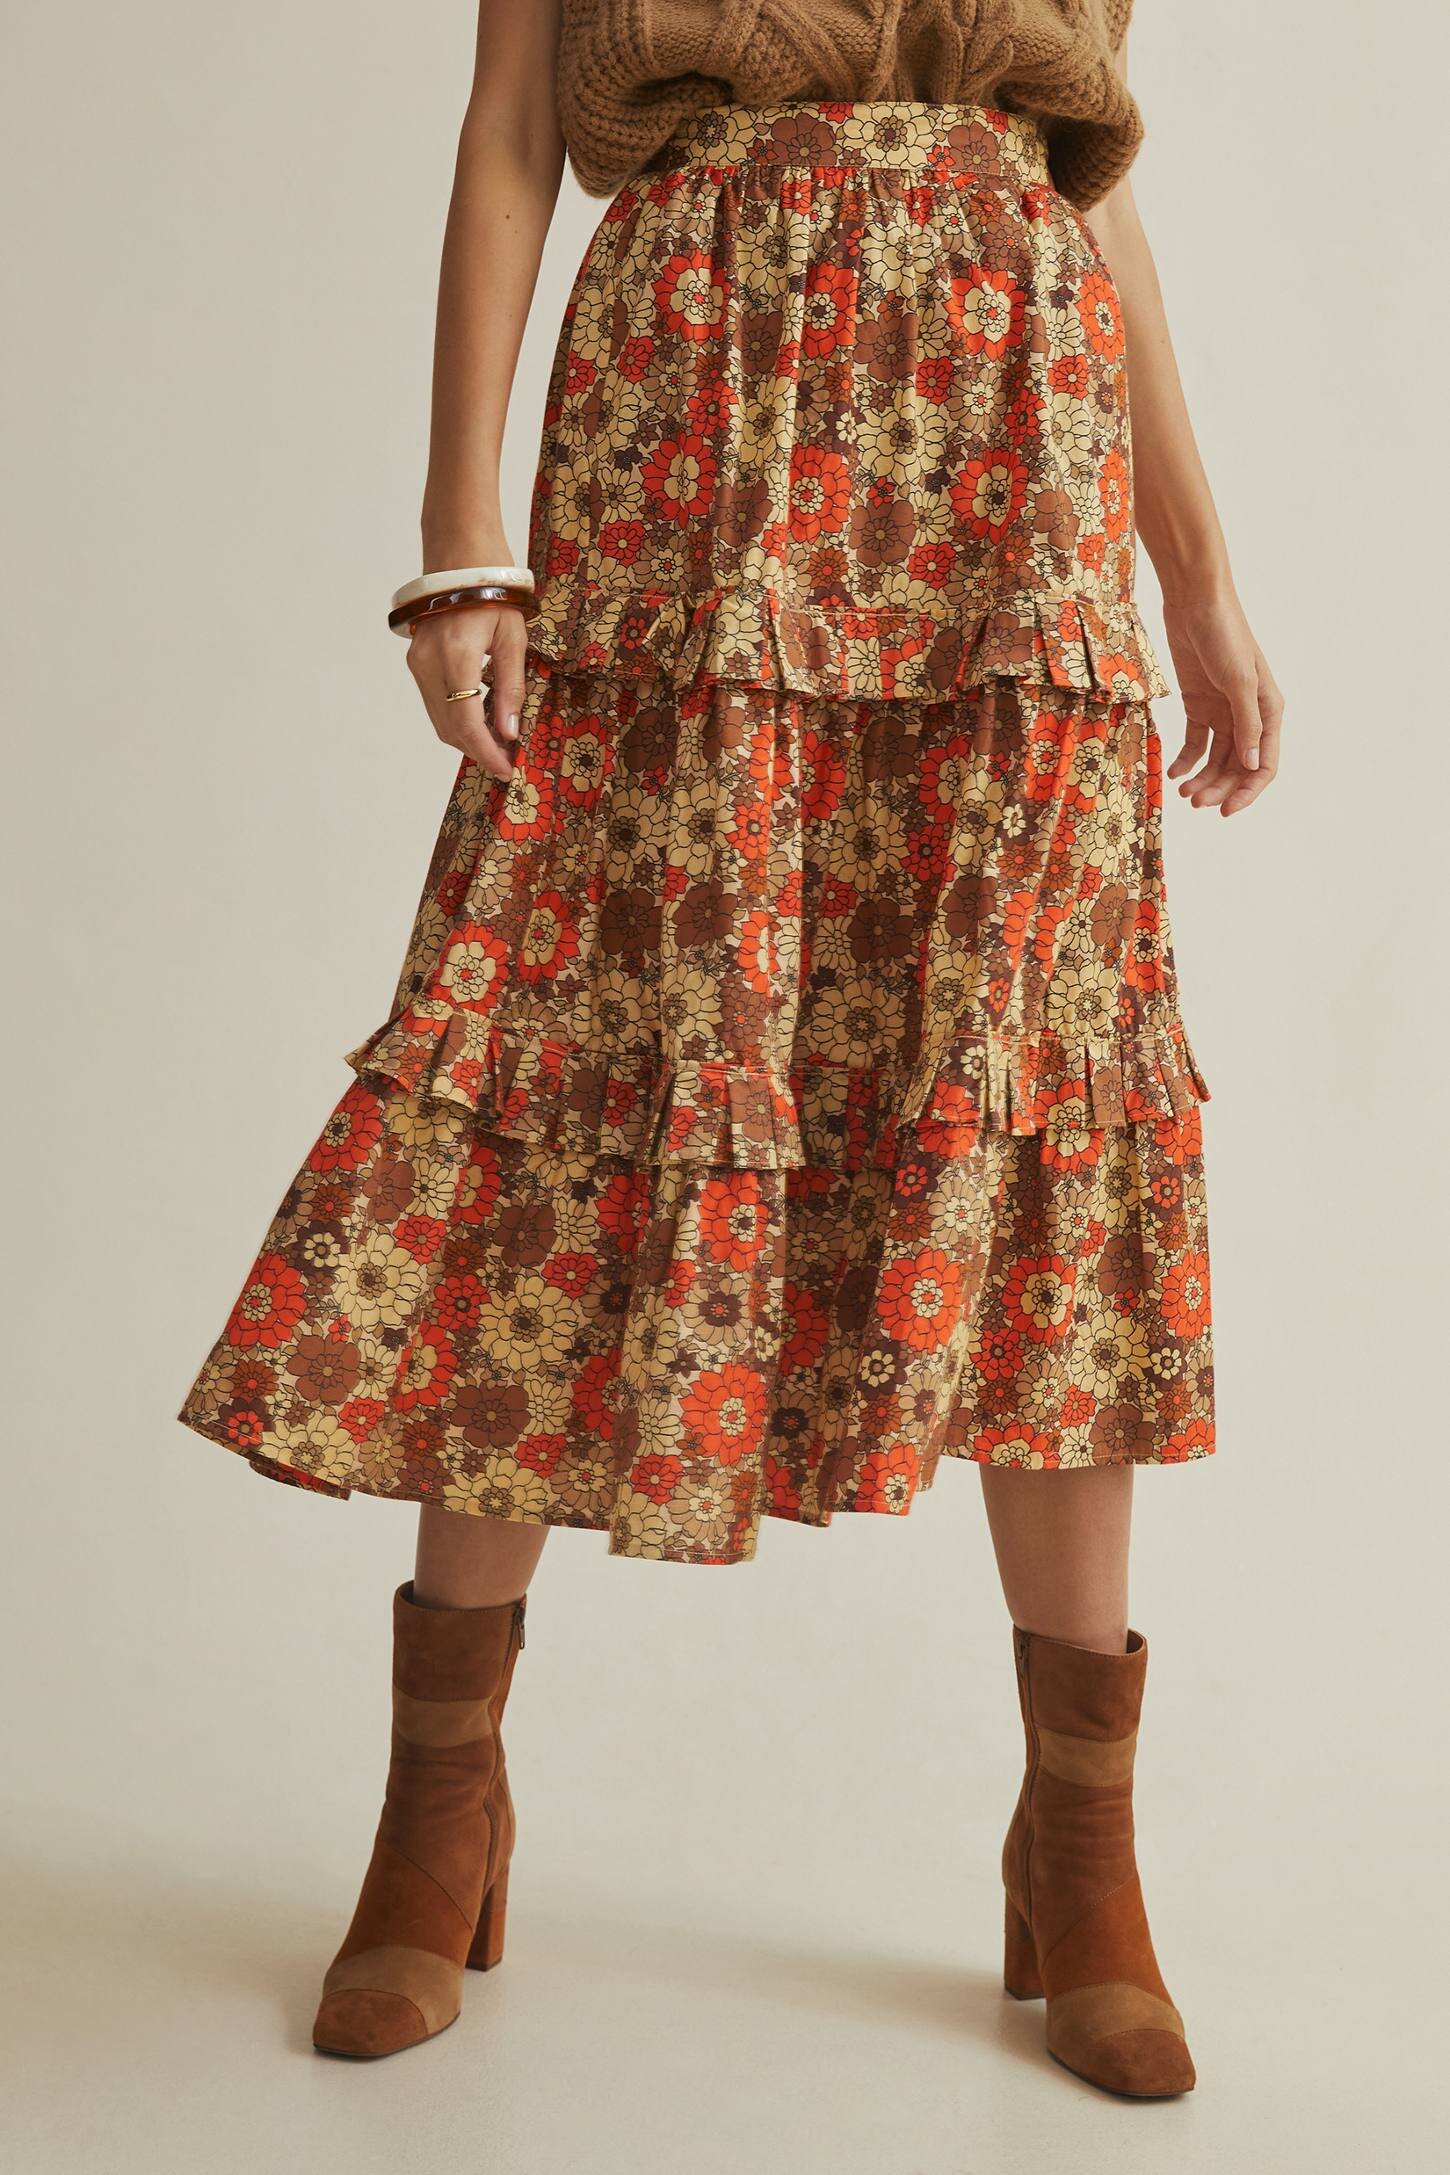 Stella Pardo Ruffled Floral Maxi Skirt - Anthropologie.jpeg